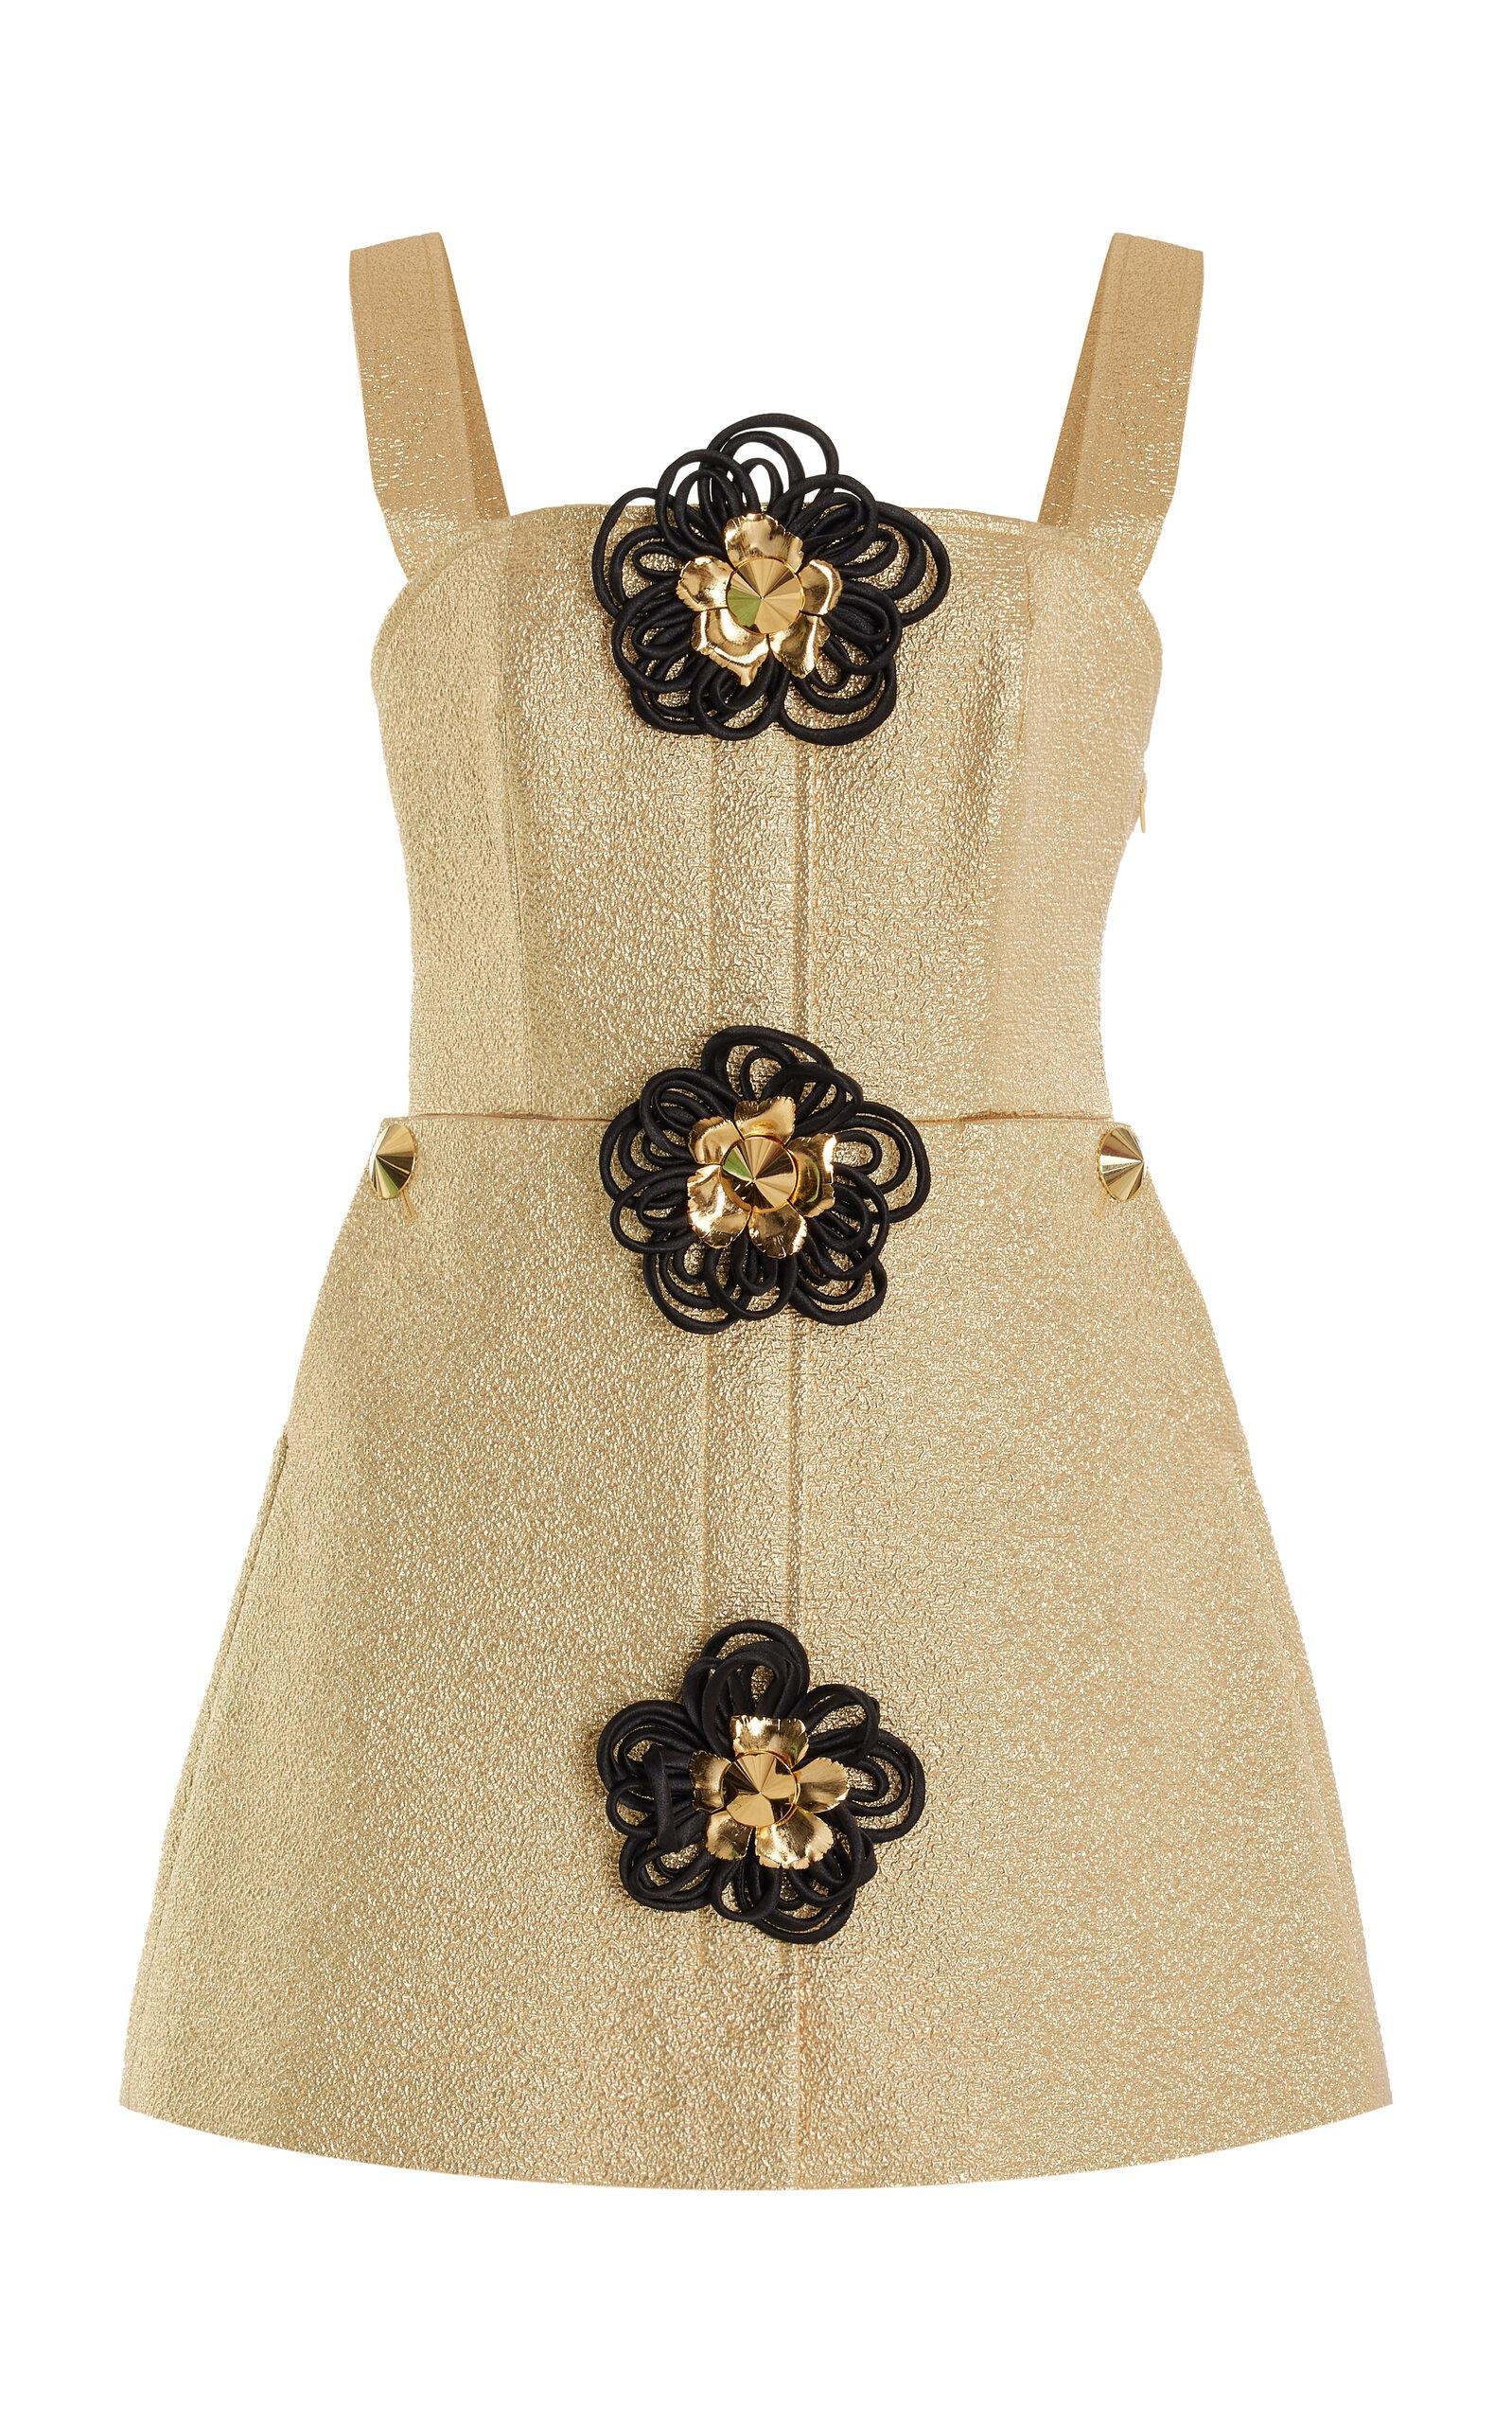 Harbison - Flora Quantum Embellished Cotton-Blend Lamé Mini Dress - Gold - US 14 - Only At Moda Operandi by HARBISON